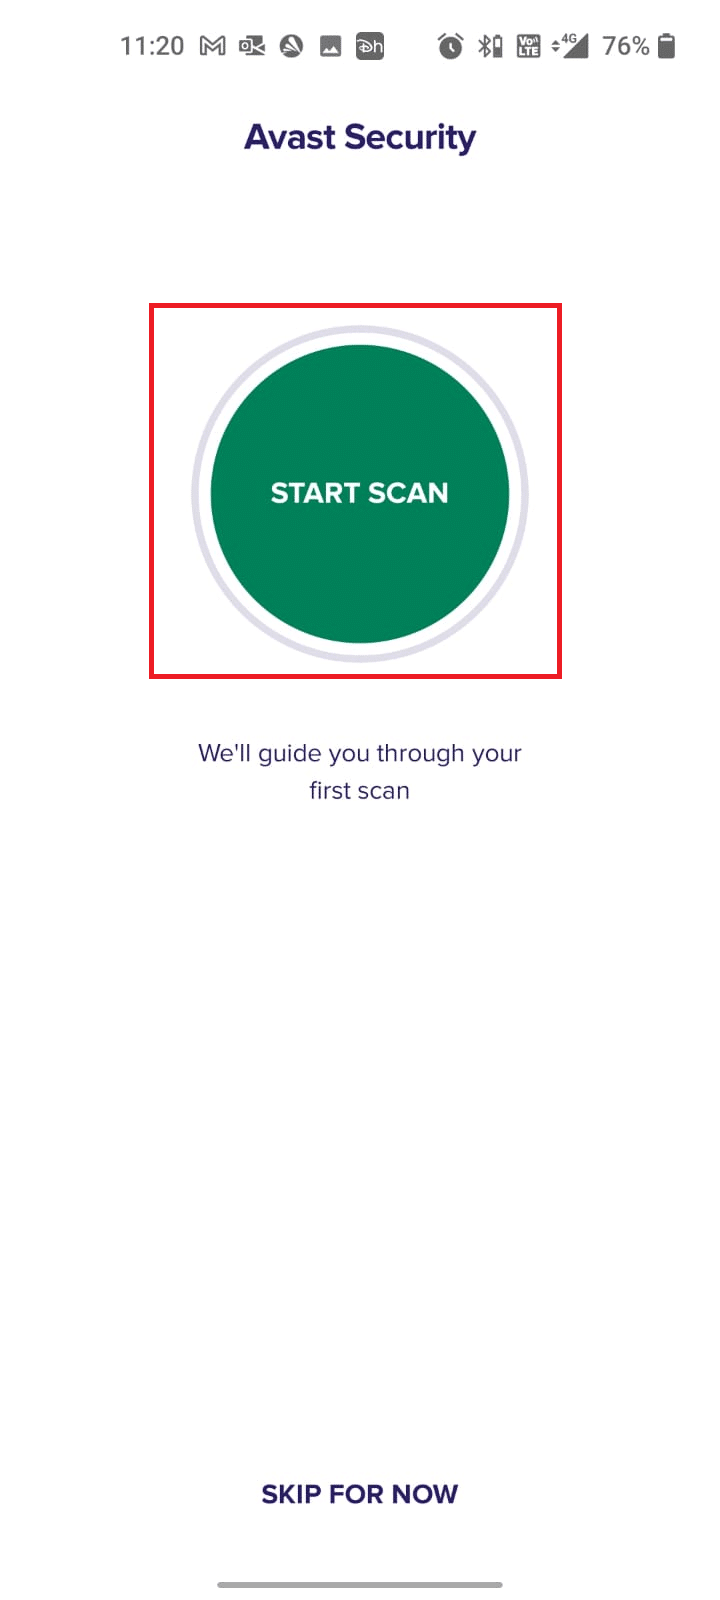 Start scan option